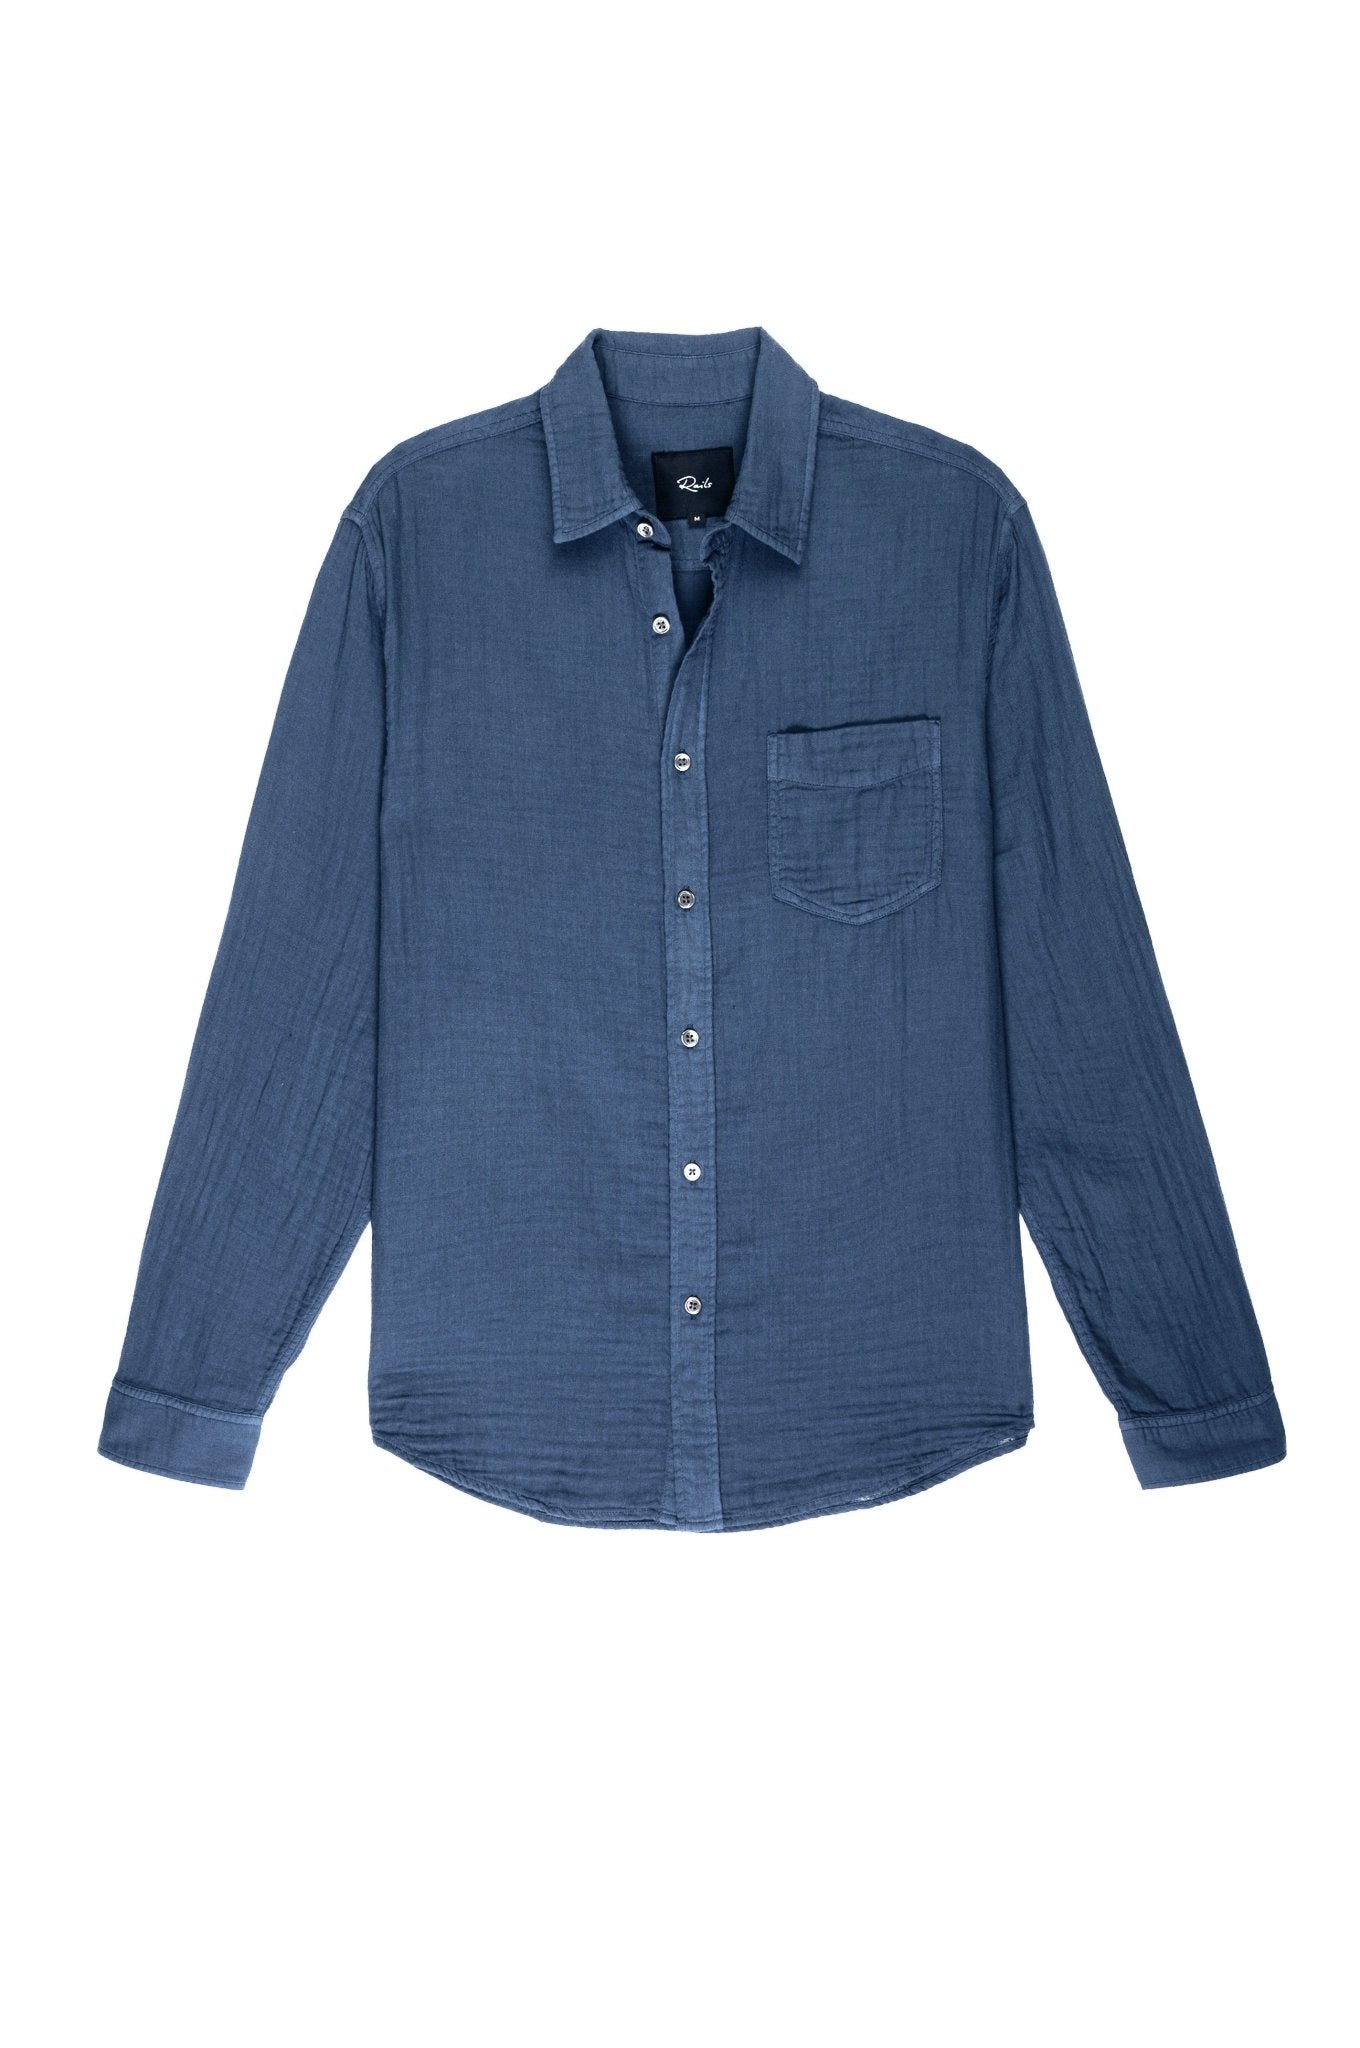 Rails Owen shirt in Indigo - Estilo Boutique